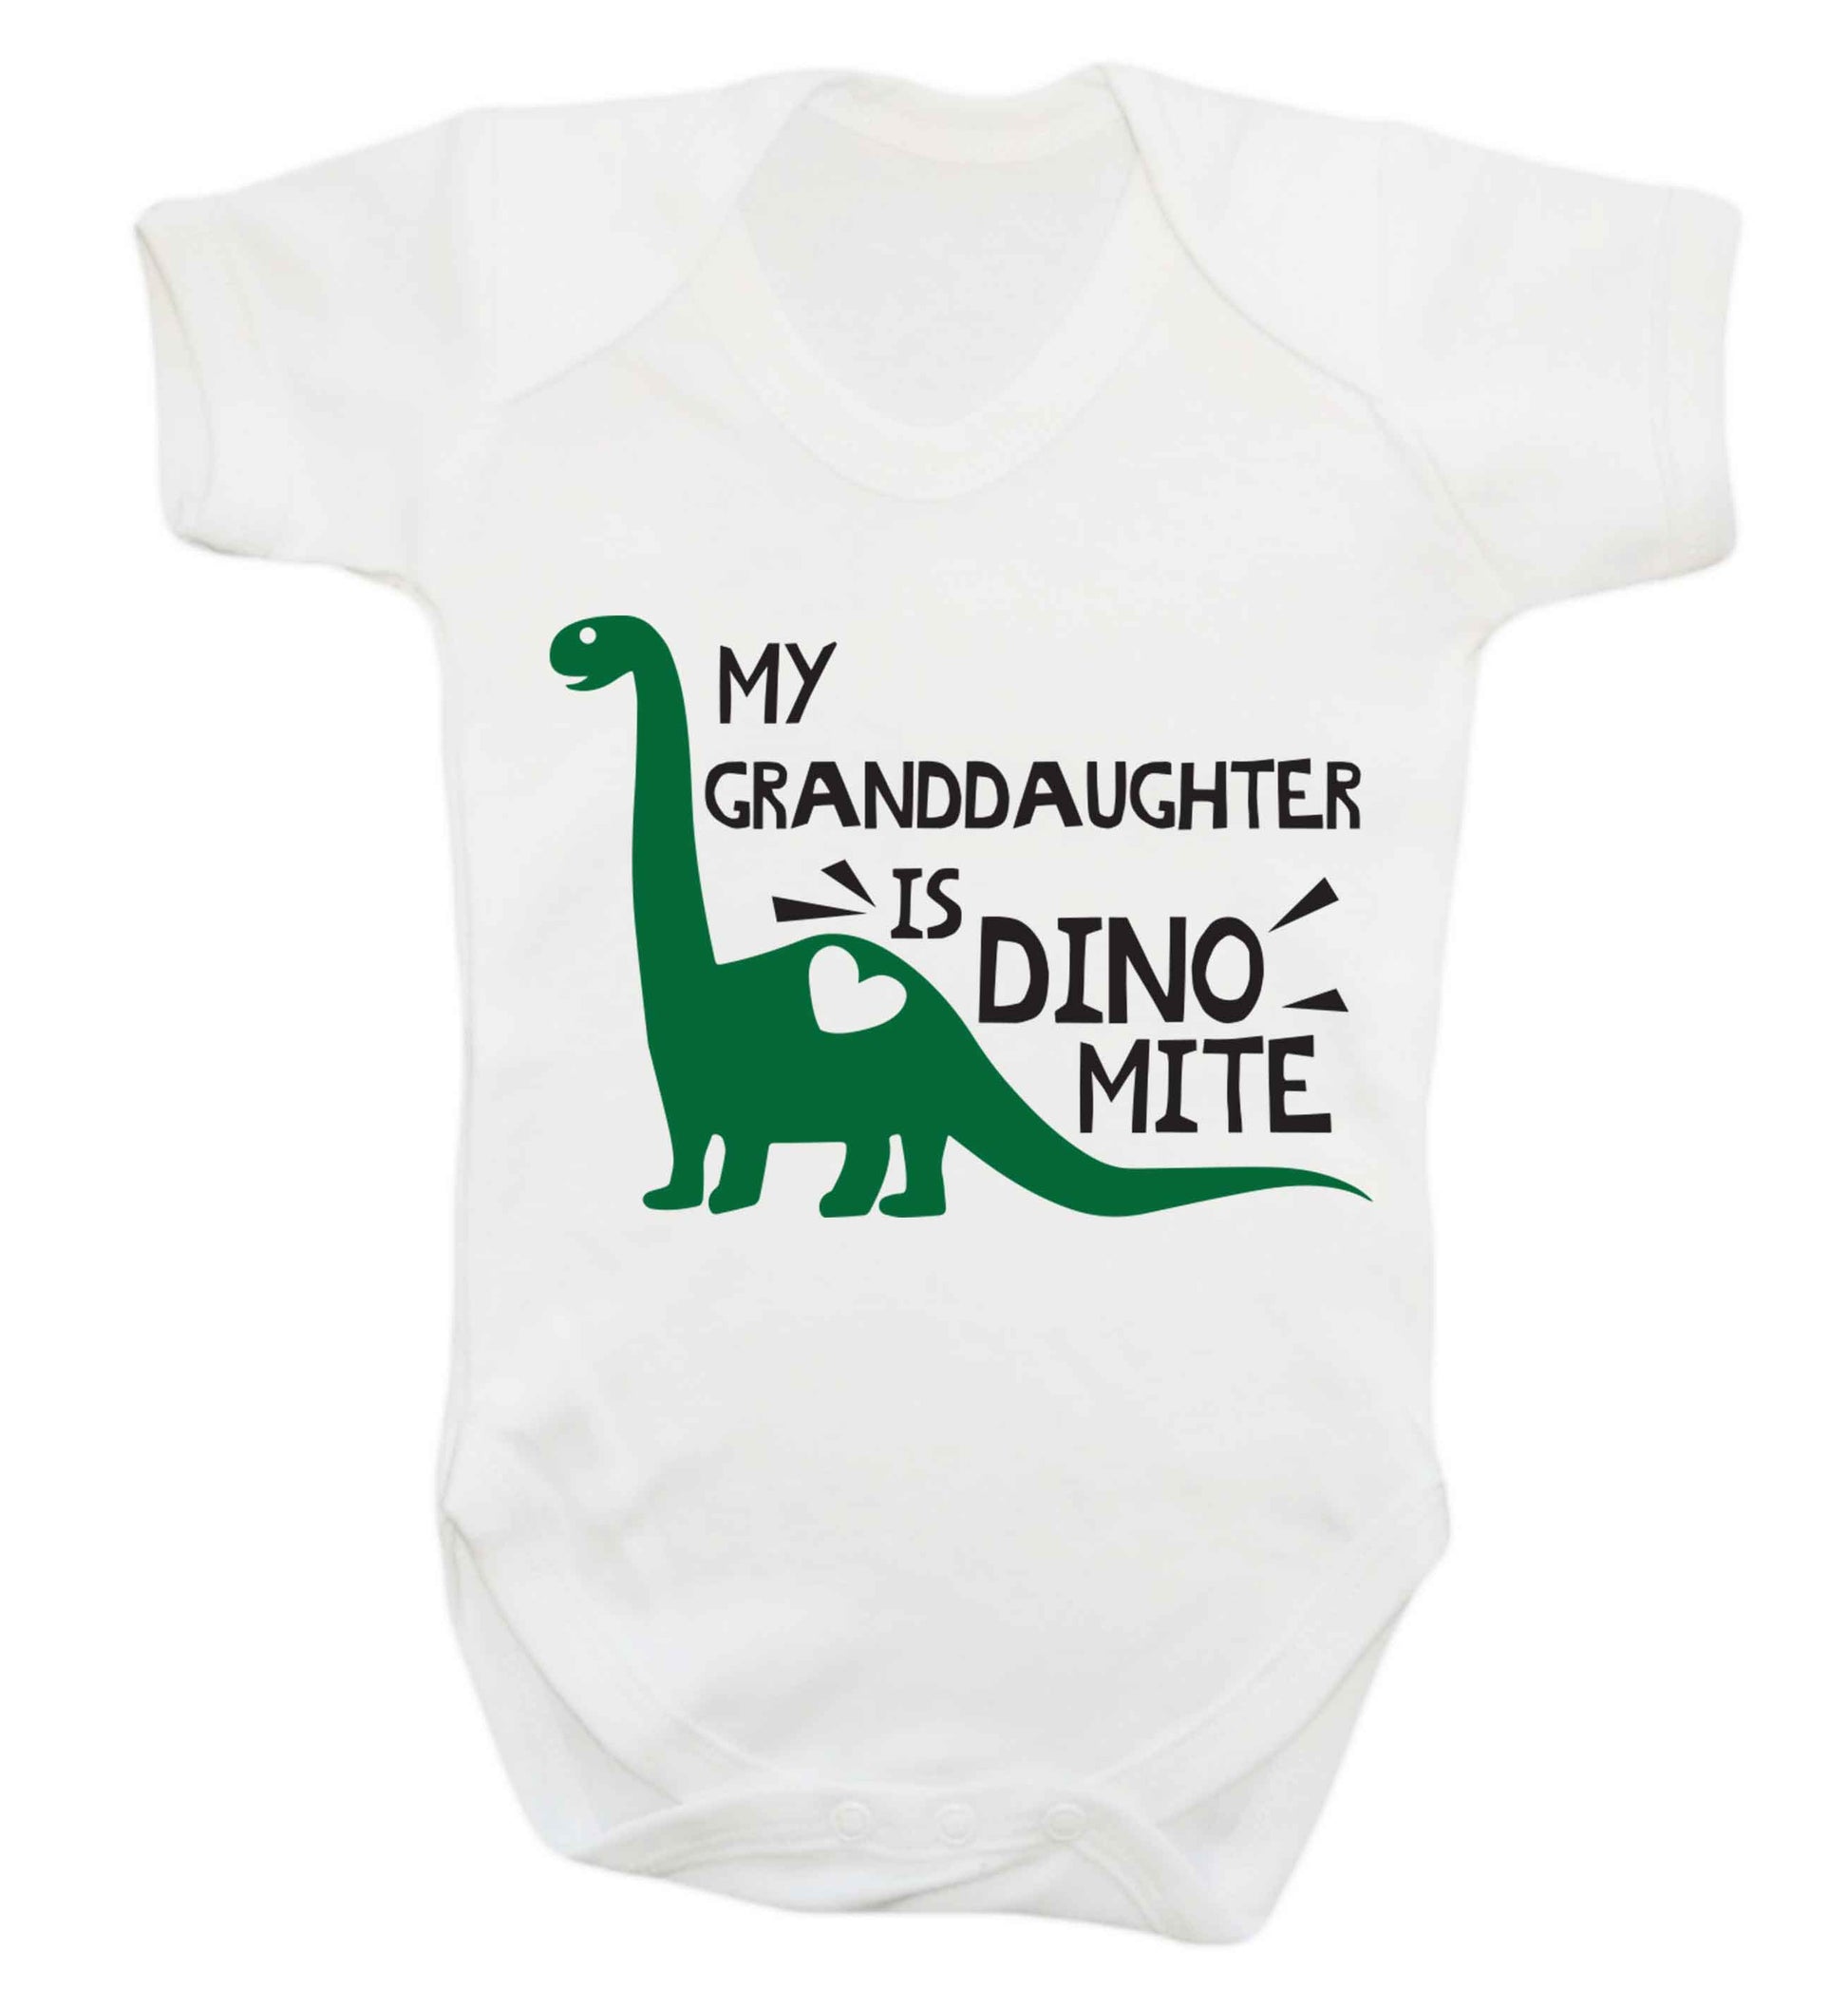 My granddaughter is dinomite! Baby Vest white 18-24 months